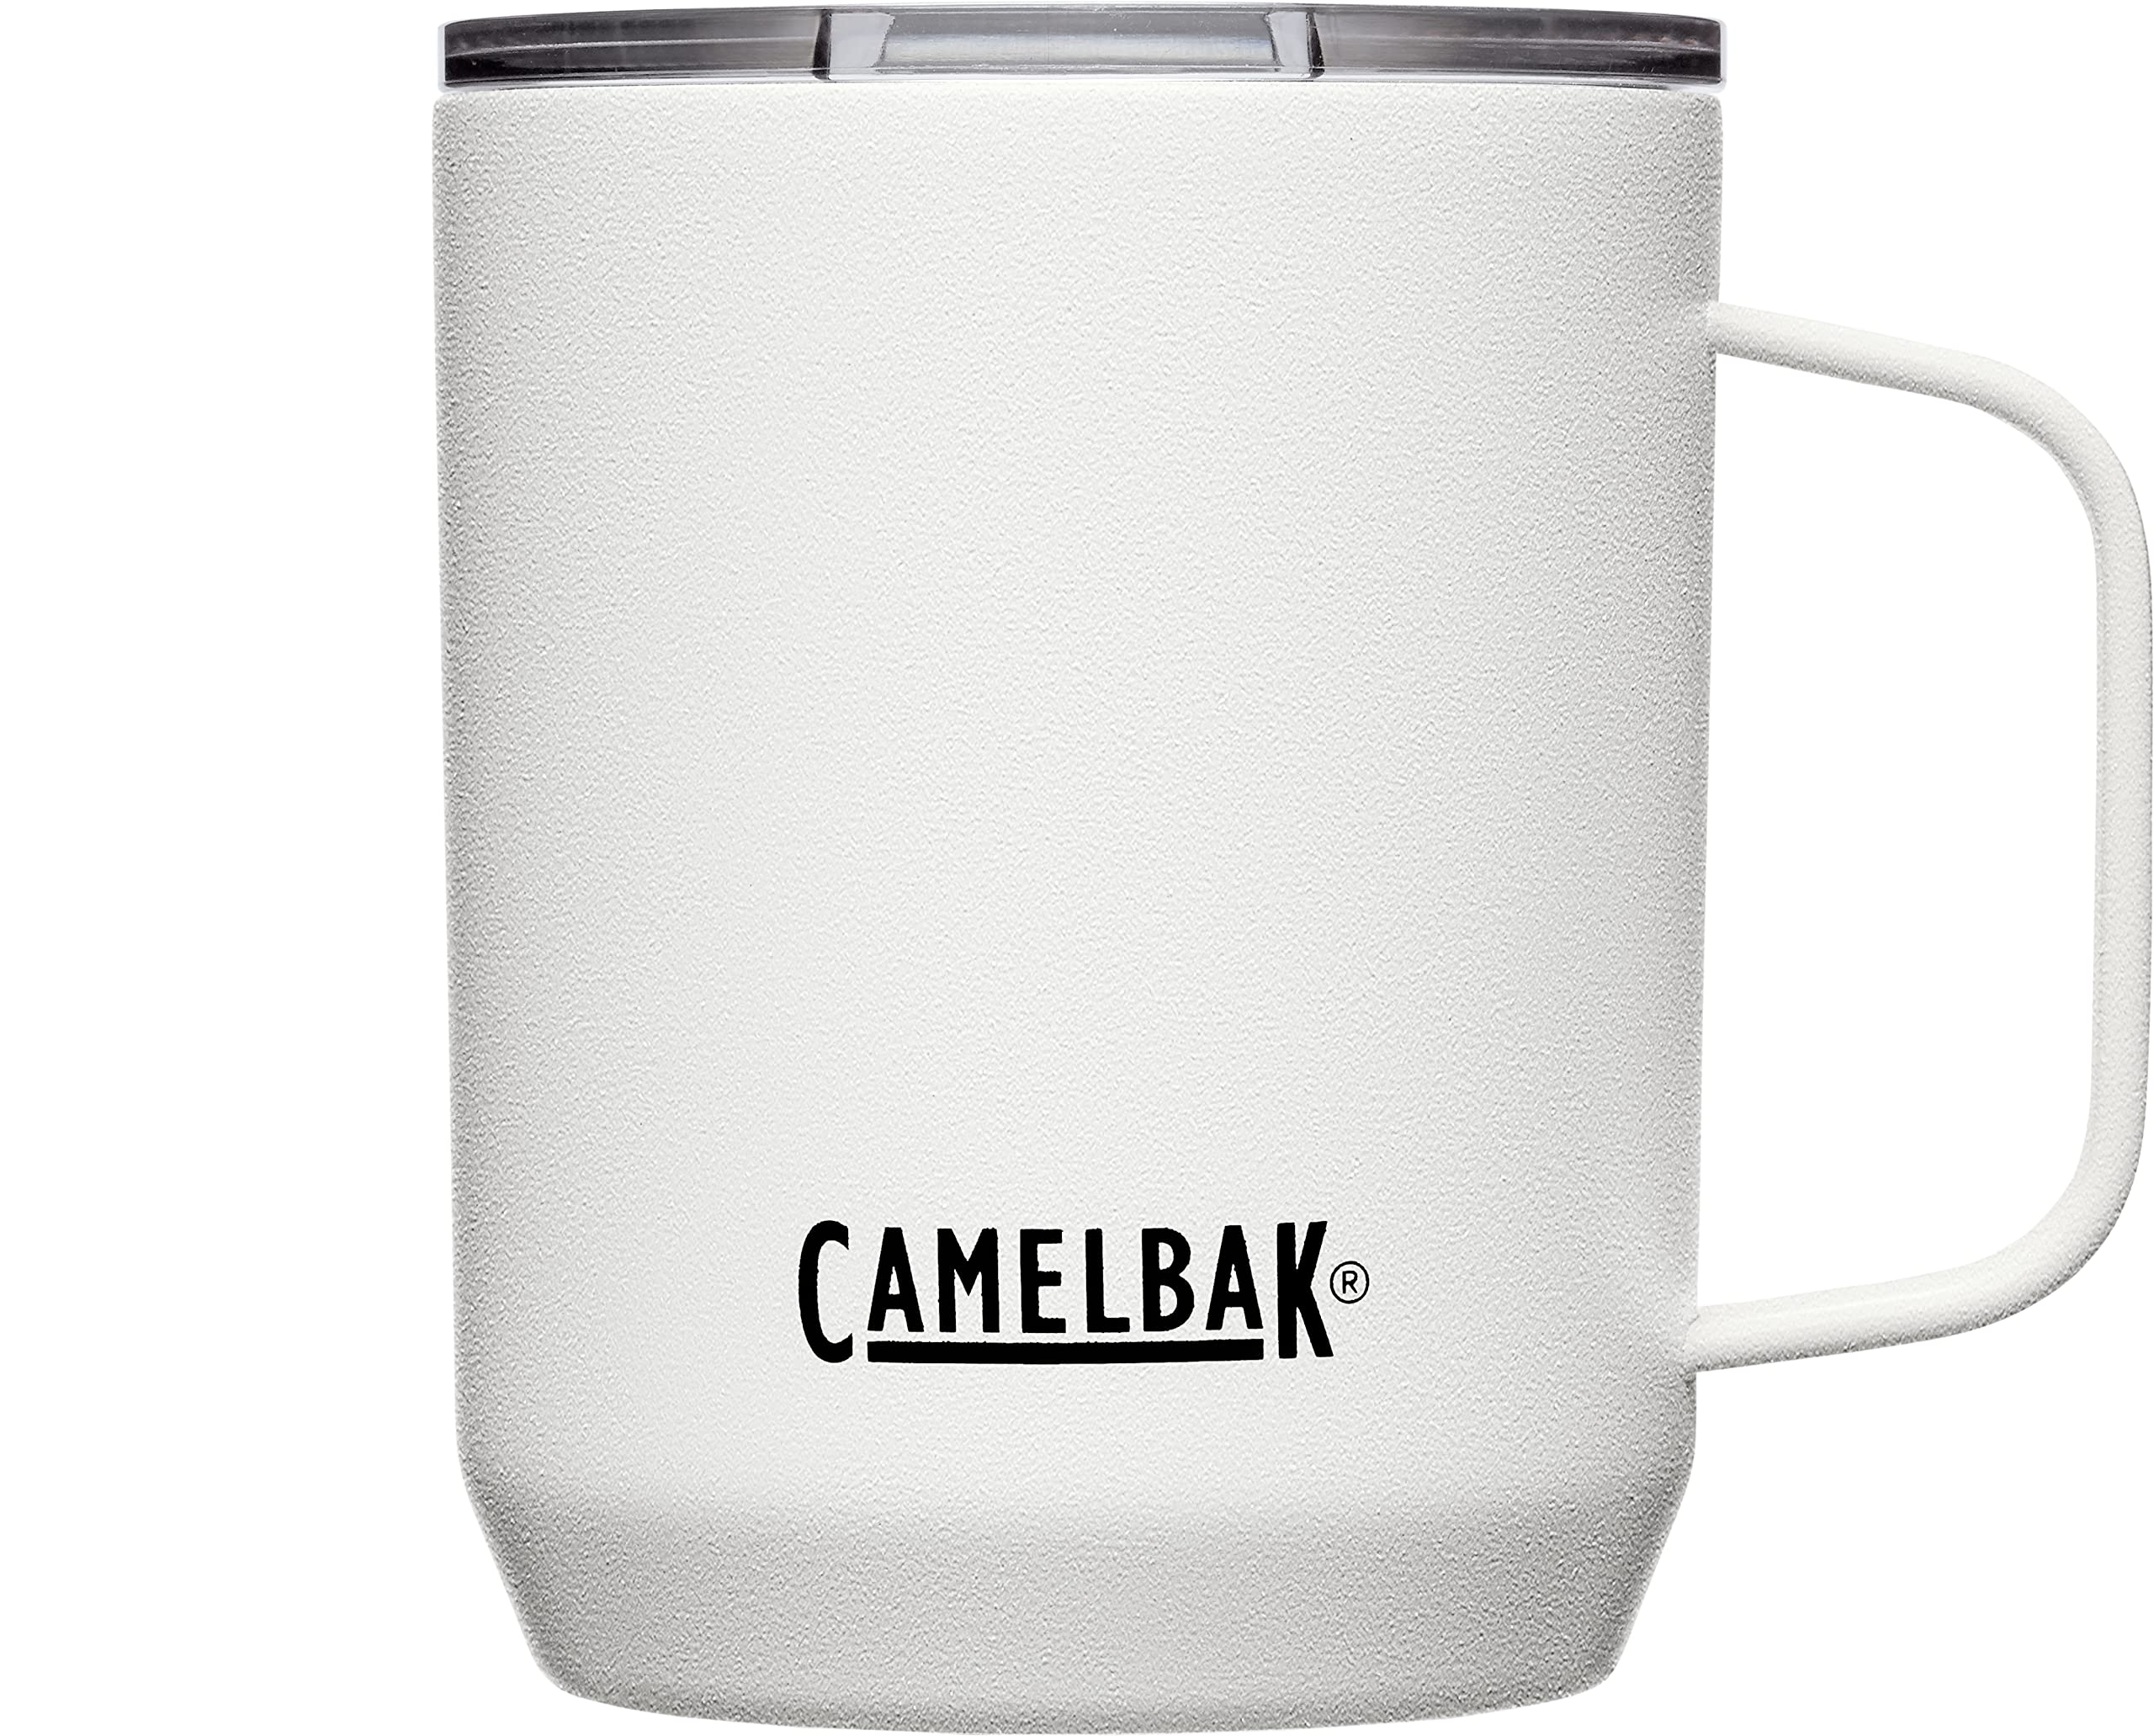 CamelBak Tall Mug - Black 24 oz